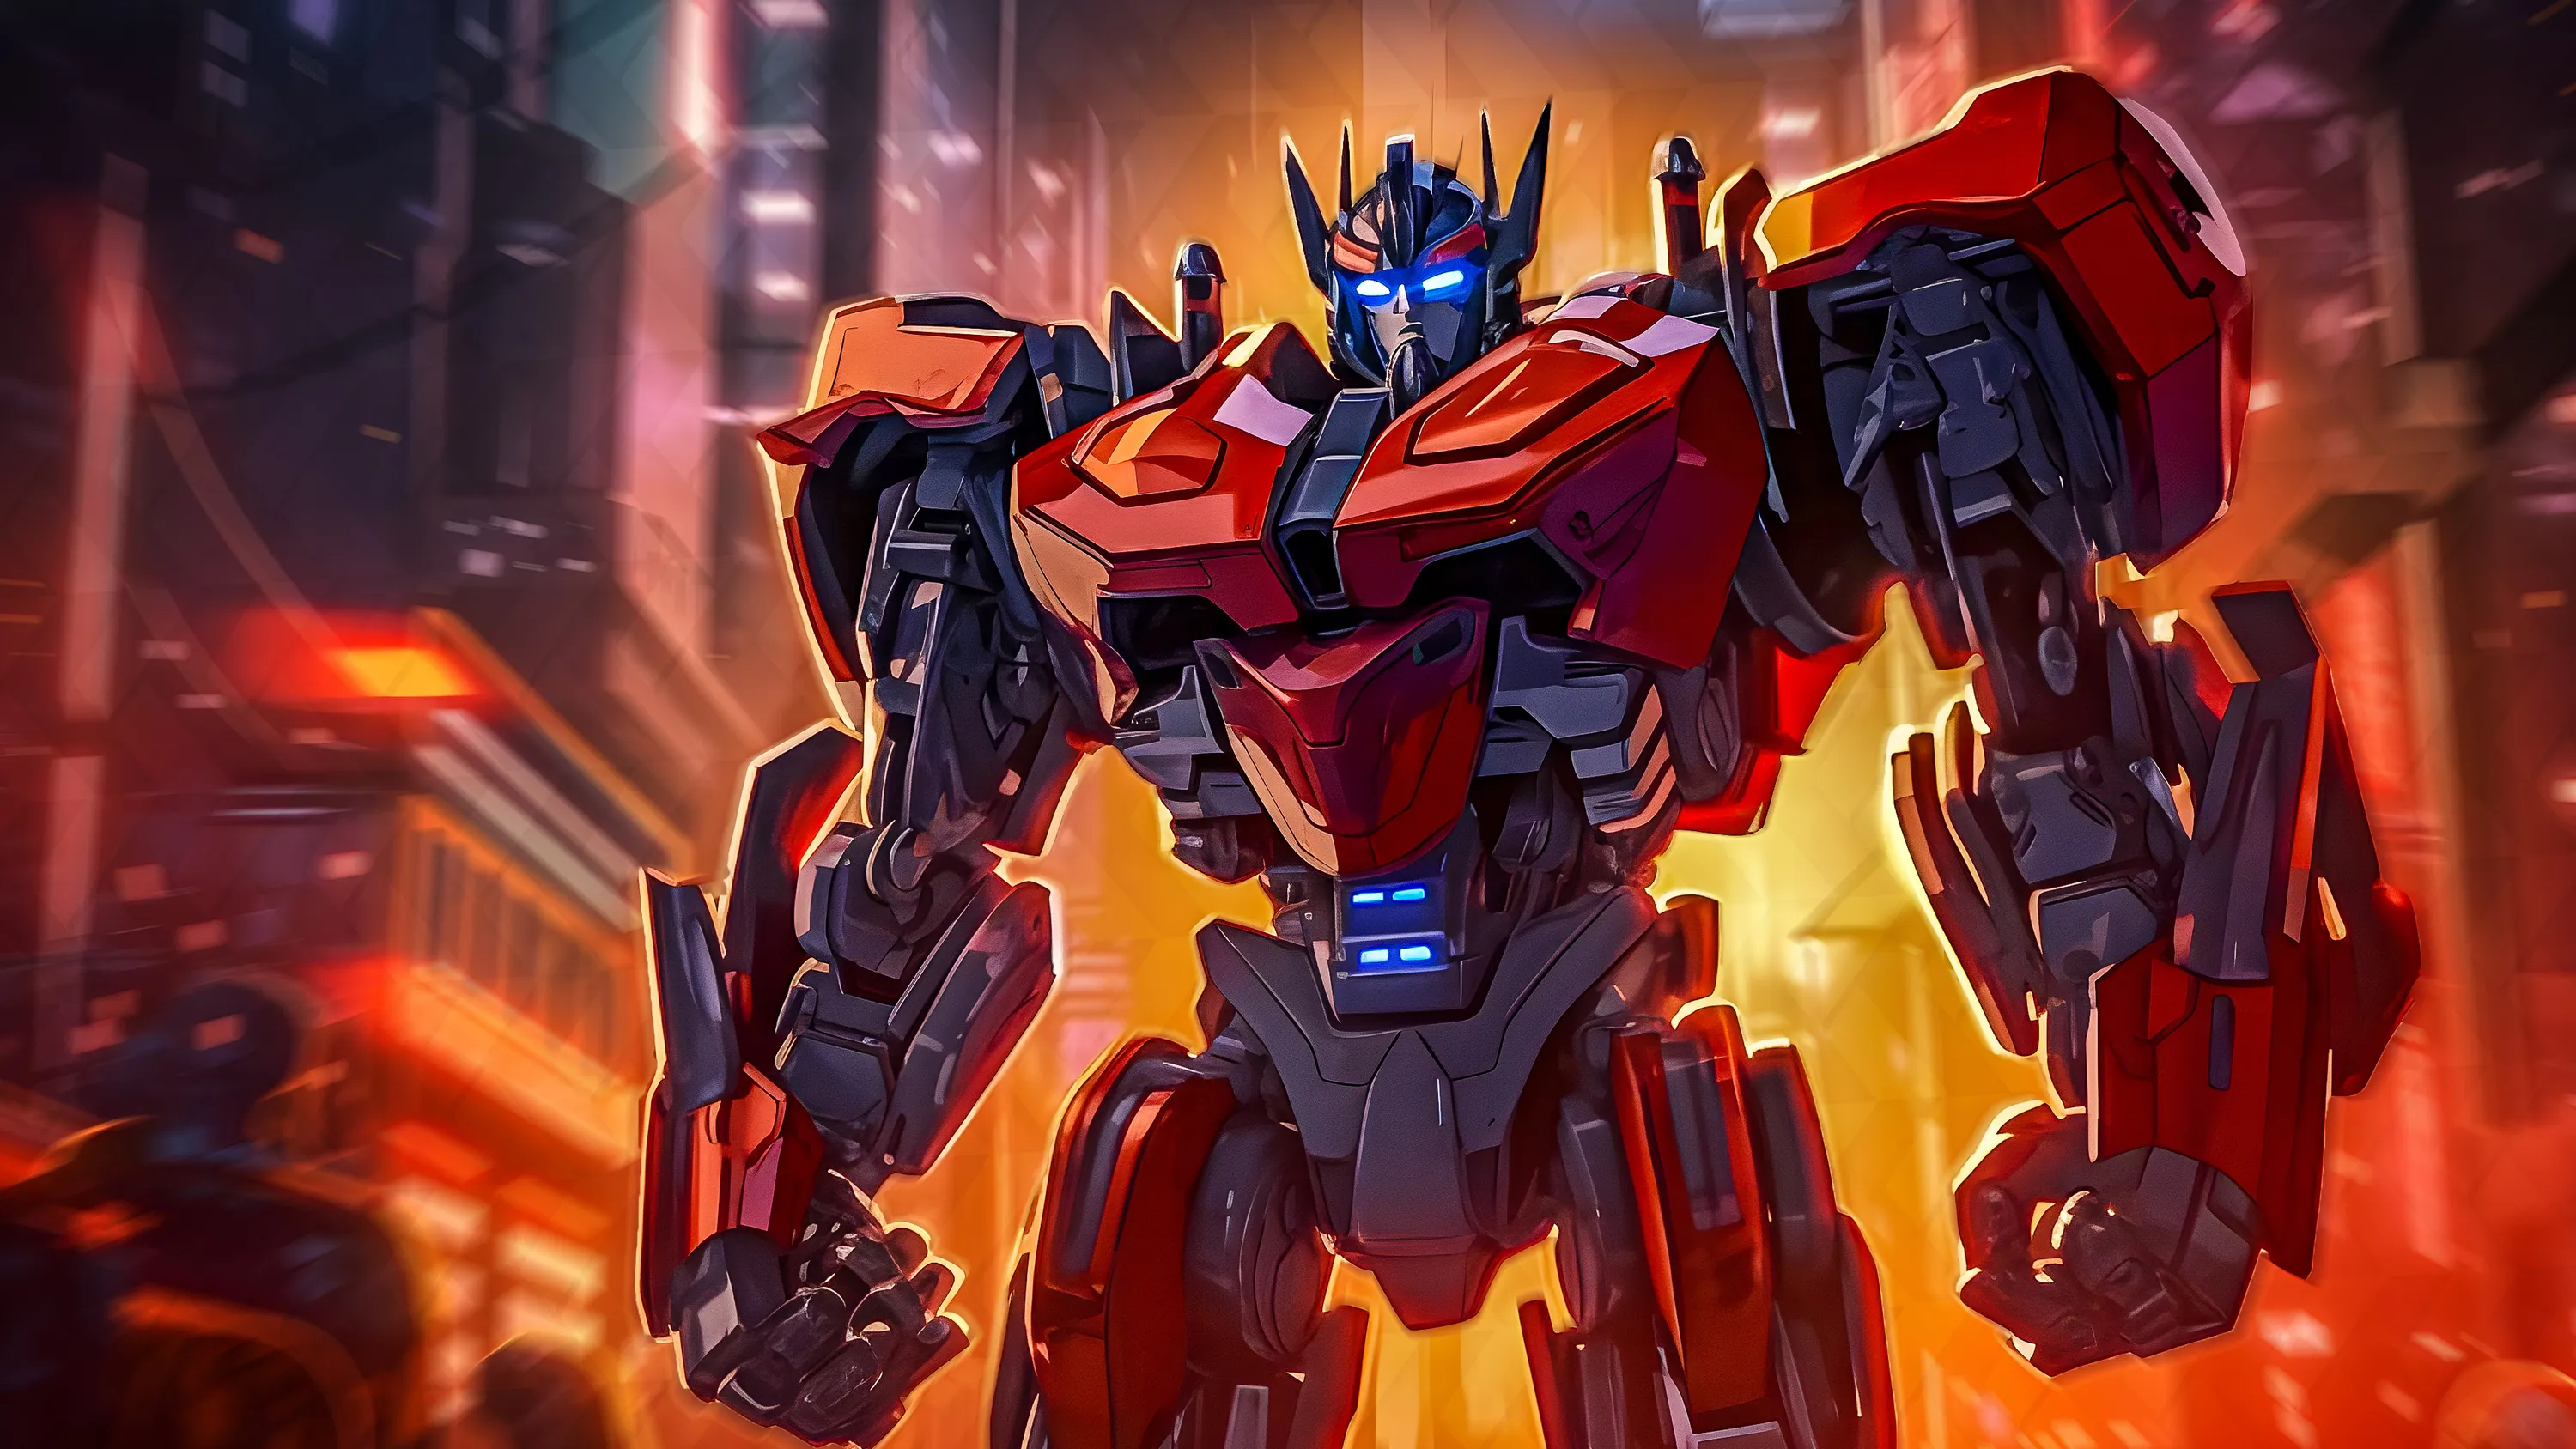 Transformers One Filmvorschau Film & Serien News KinoCheck